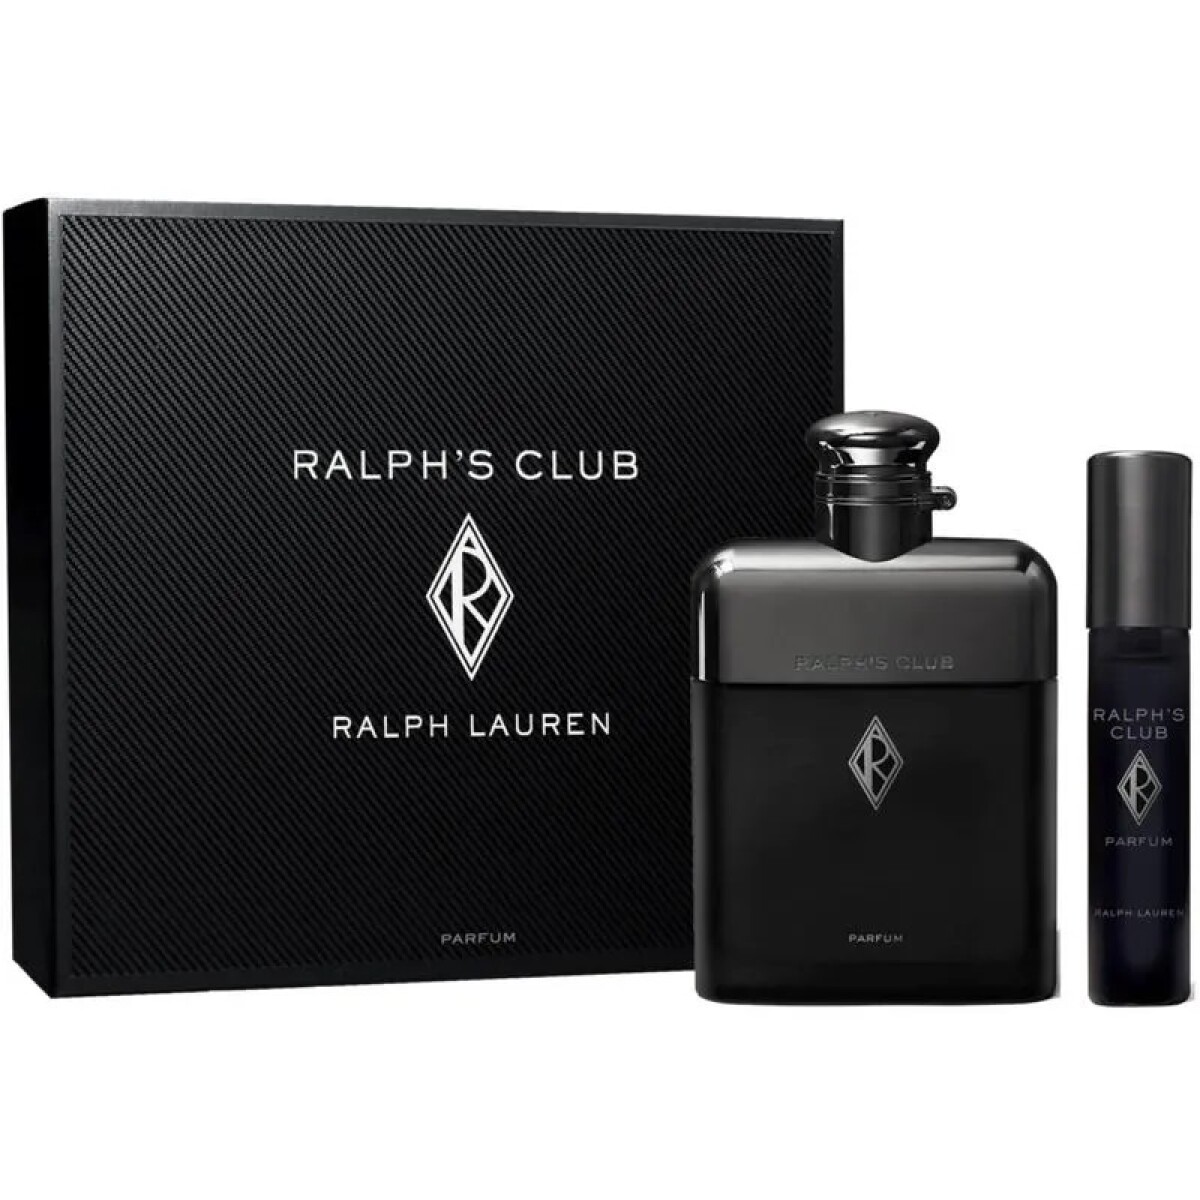 Perfume Ralph Club 100ml+10ml. 